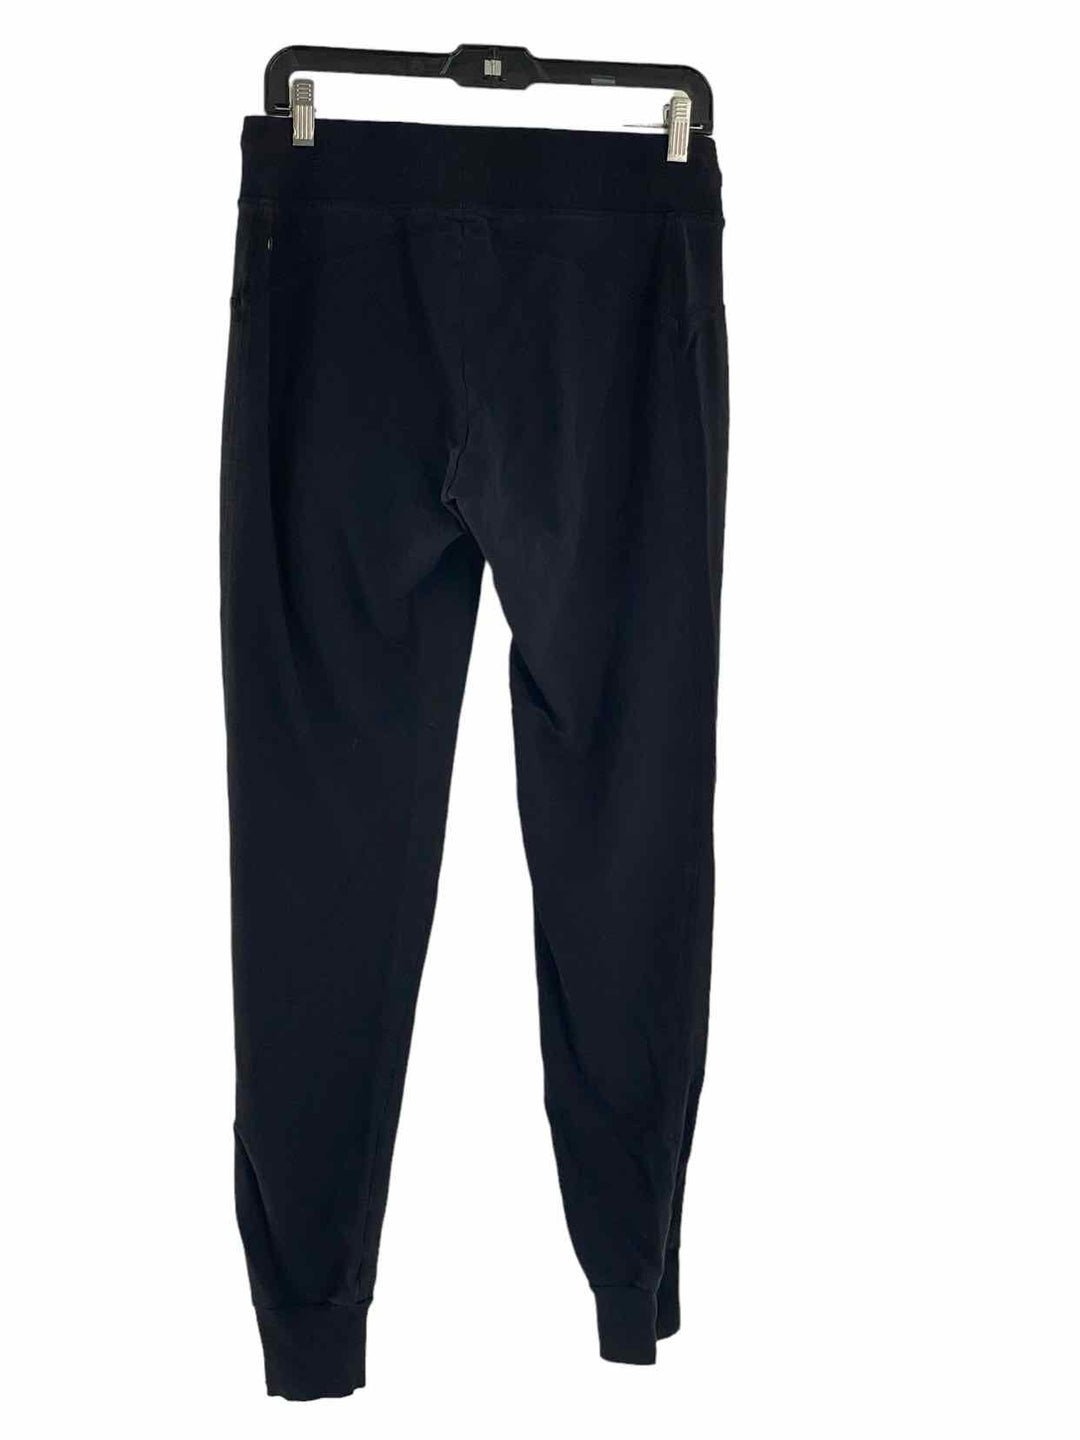 Zella Size S Black Athletic Pants